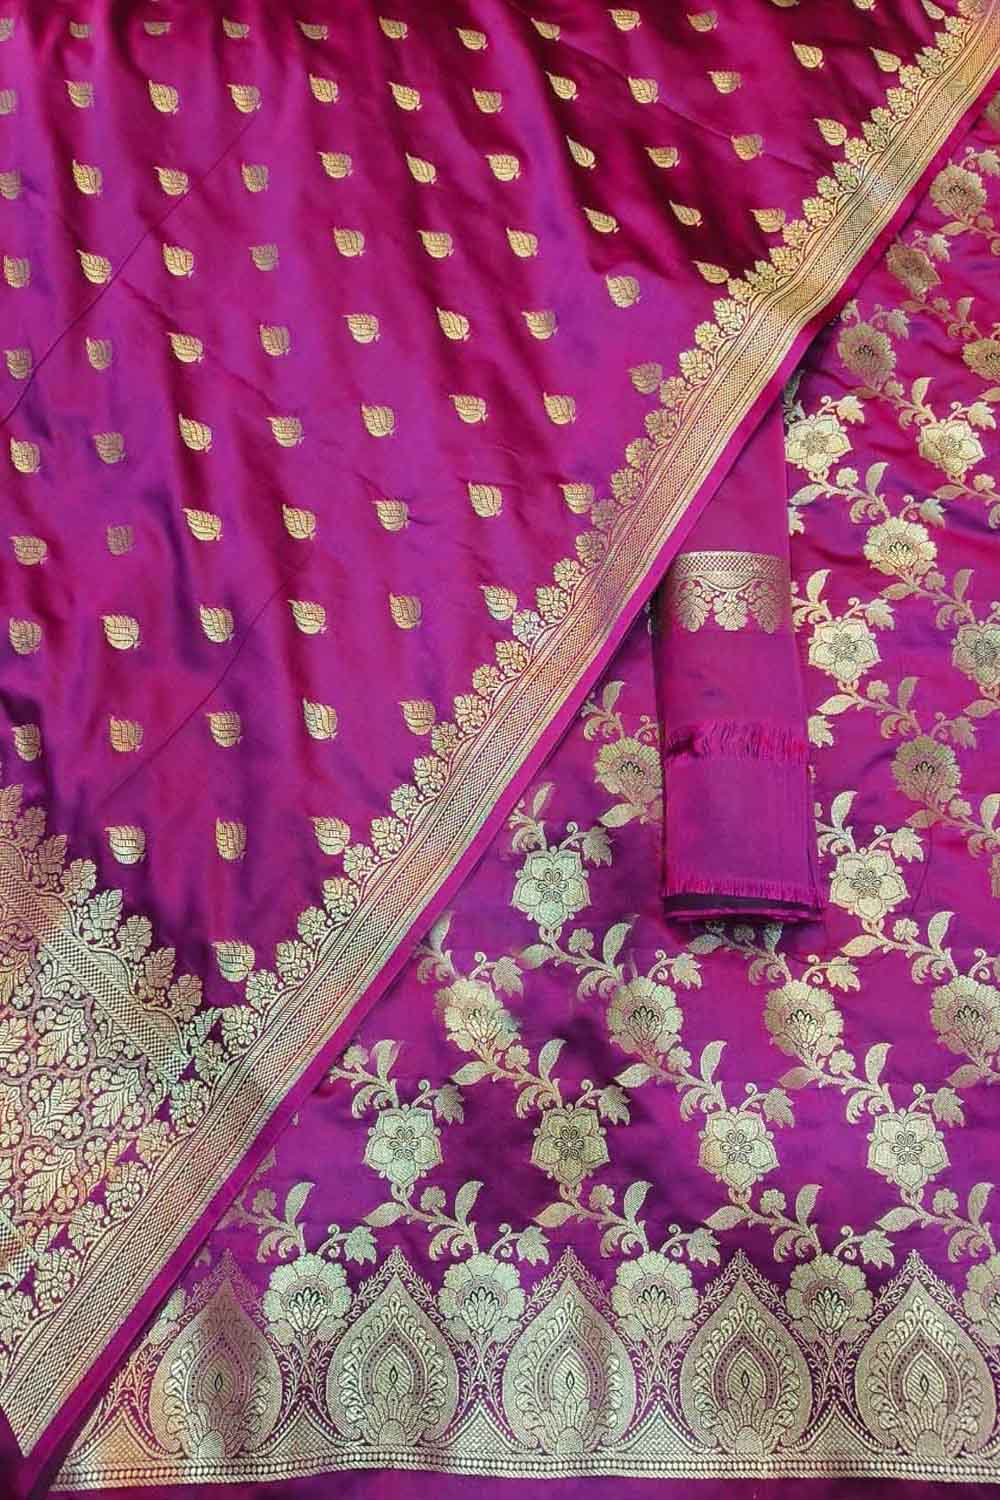 Glammrous Royal blue with rani pink thread temple design border